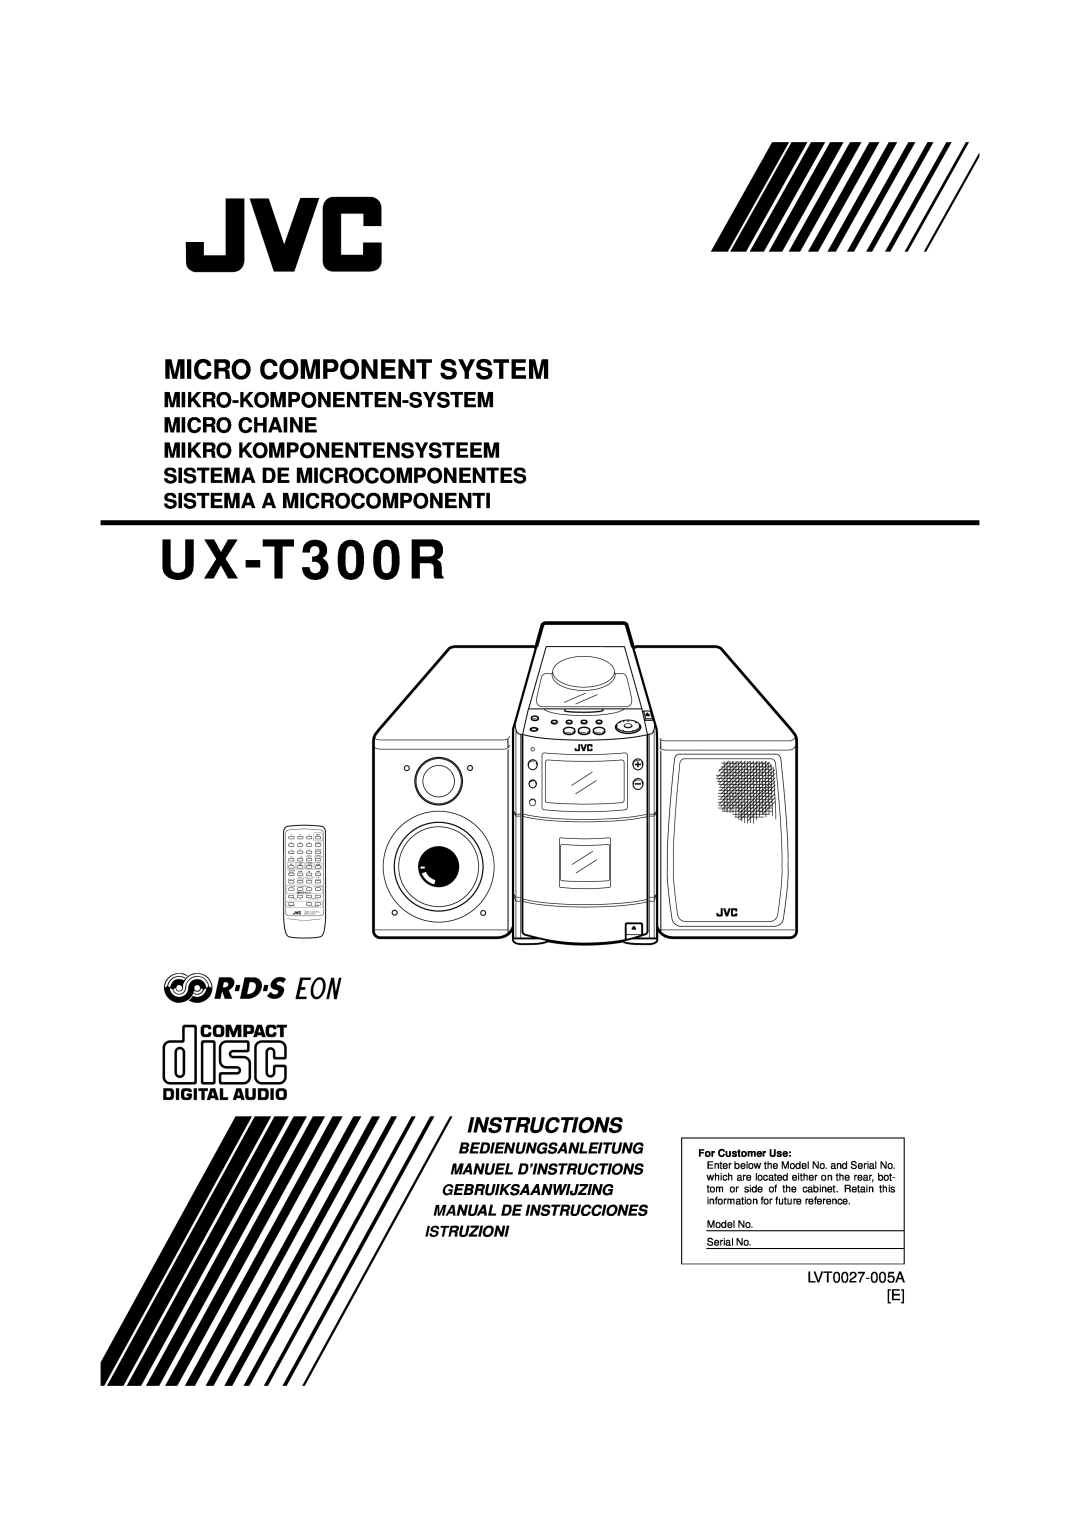 JVC UX-T300R manual Bedienungsanleitung Manuel D’Instructions, Gebruiksaanwijzing Manual De Instrucciones, Istruzioni 